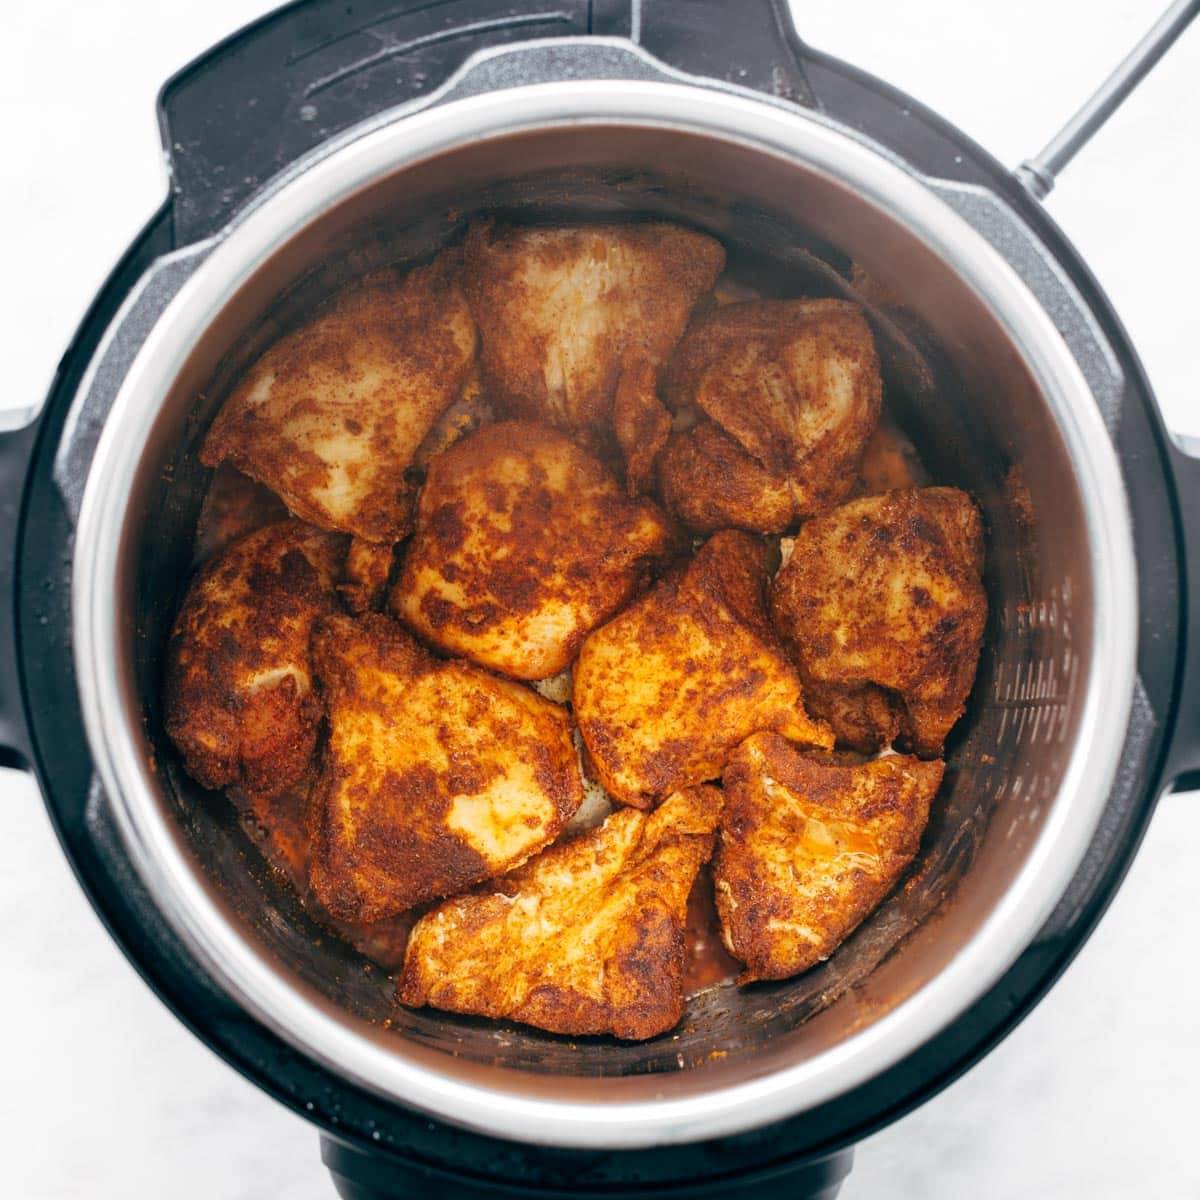 Seasoned chicken breasts in the Instant Pot.